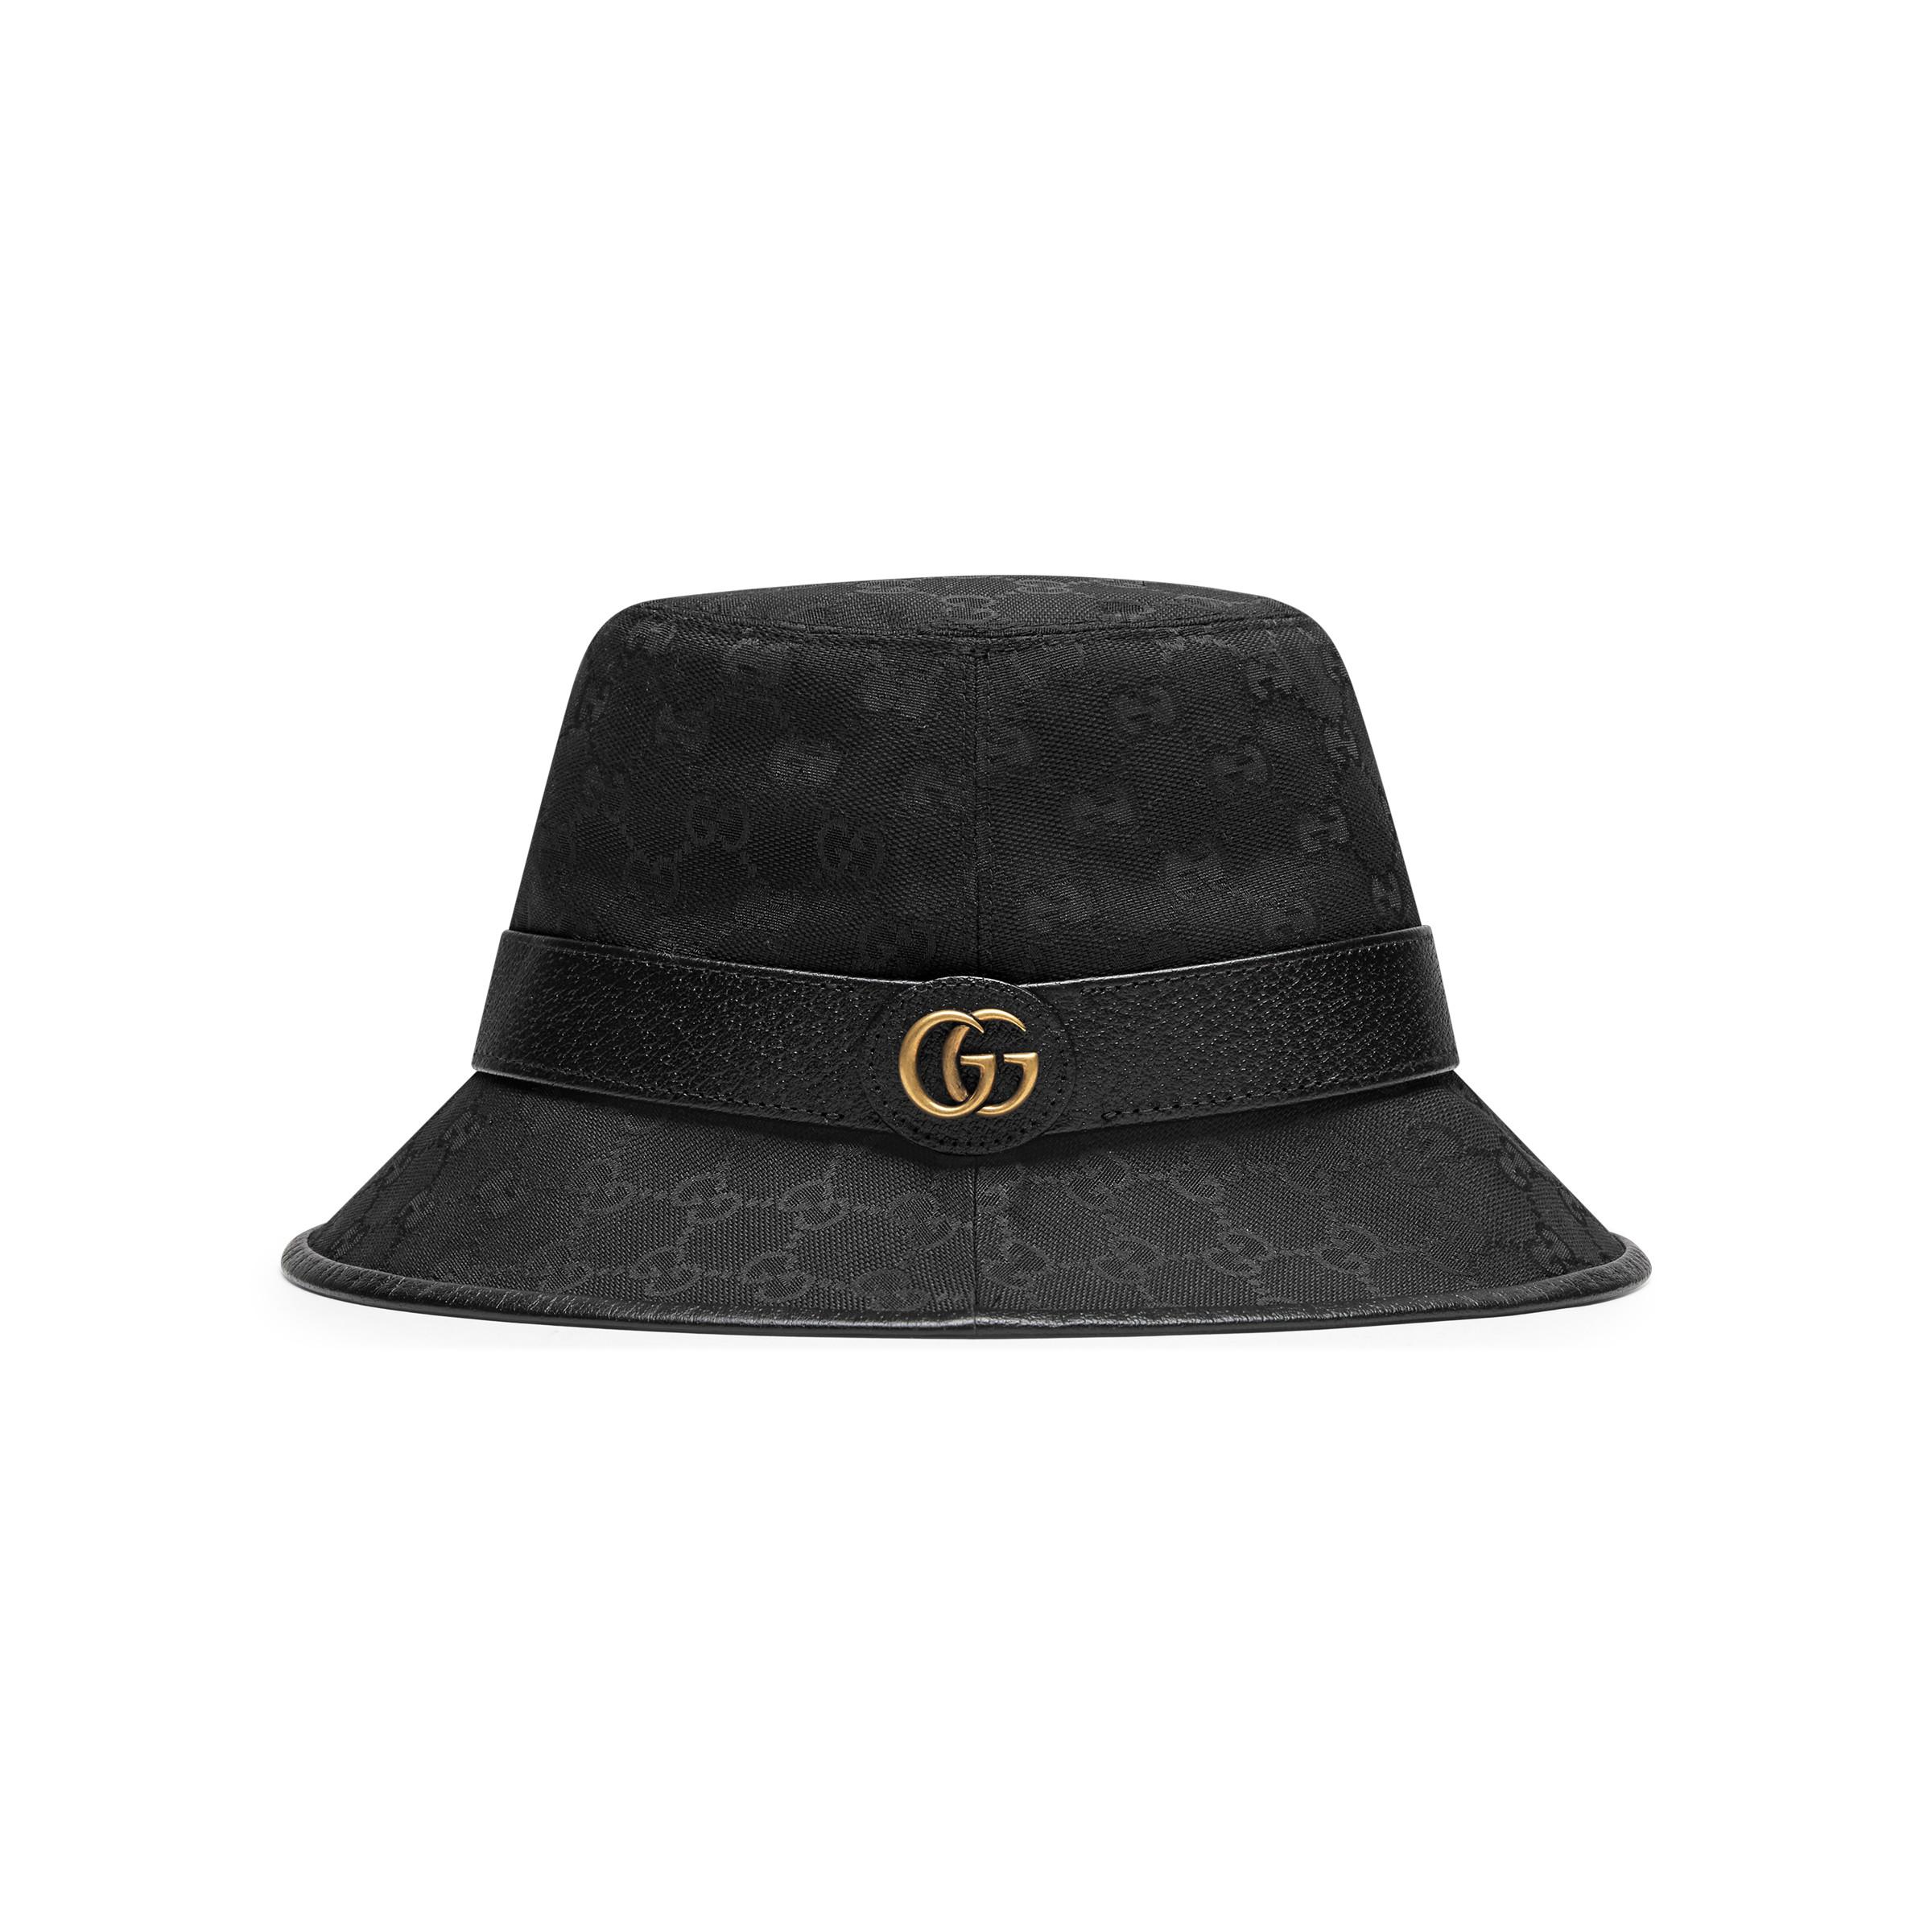 gg bucket hat